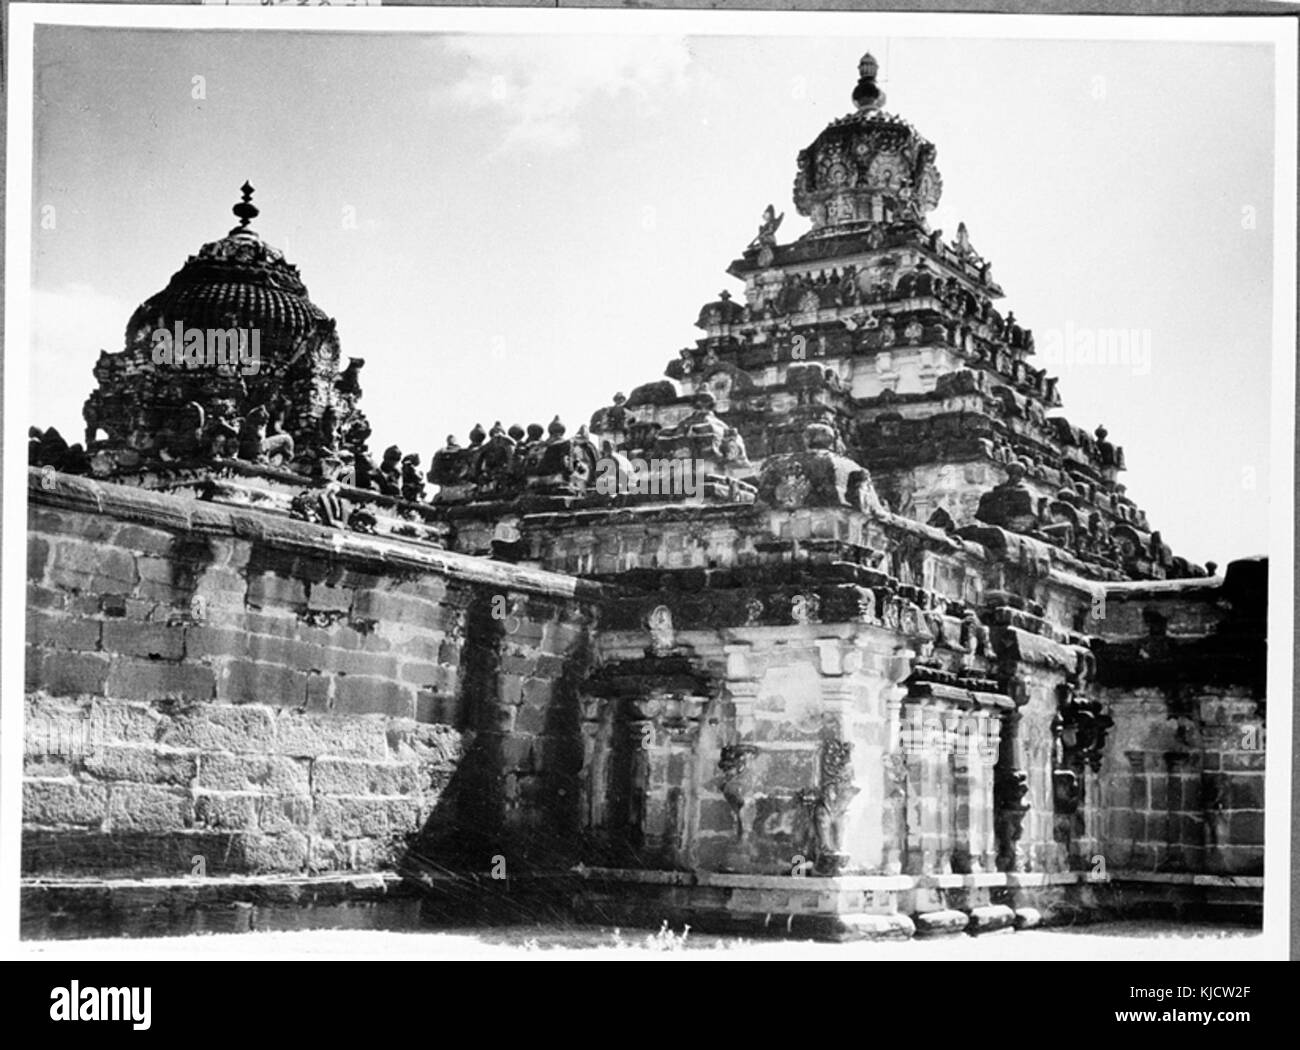 A view of Tiru Parameswara Vinnagaram temple 3 1956 Stock Photo - Alamy